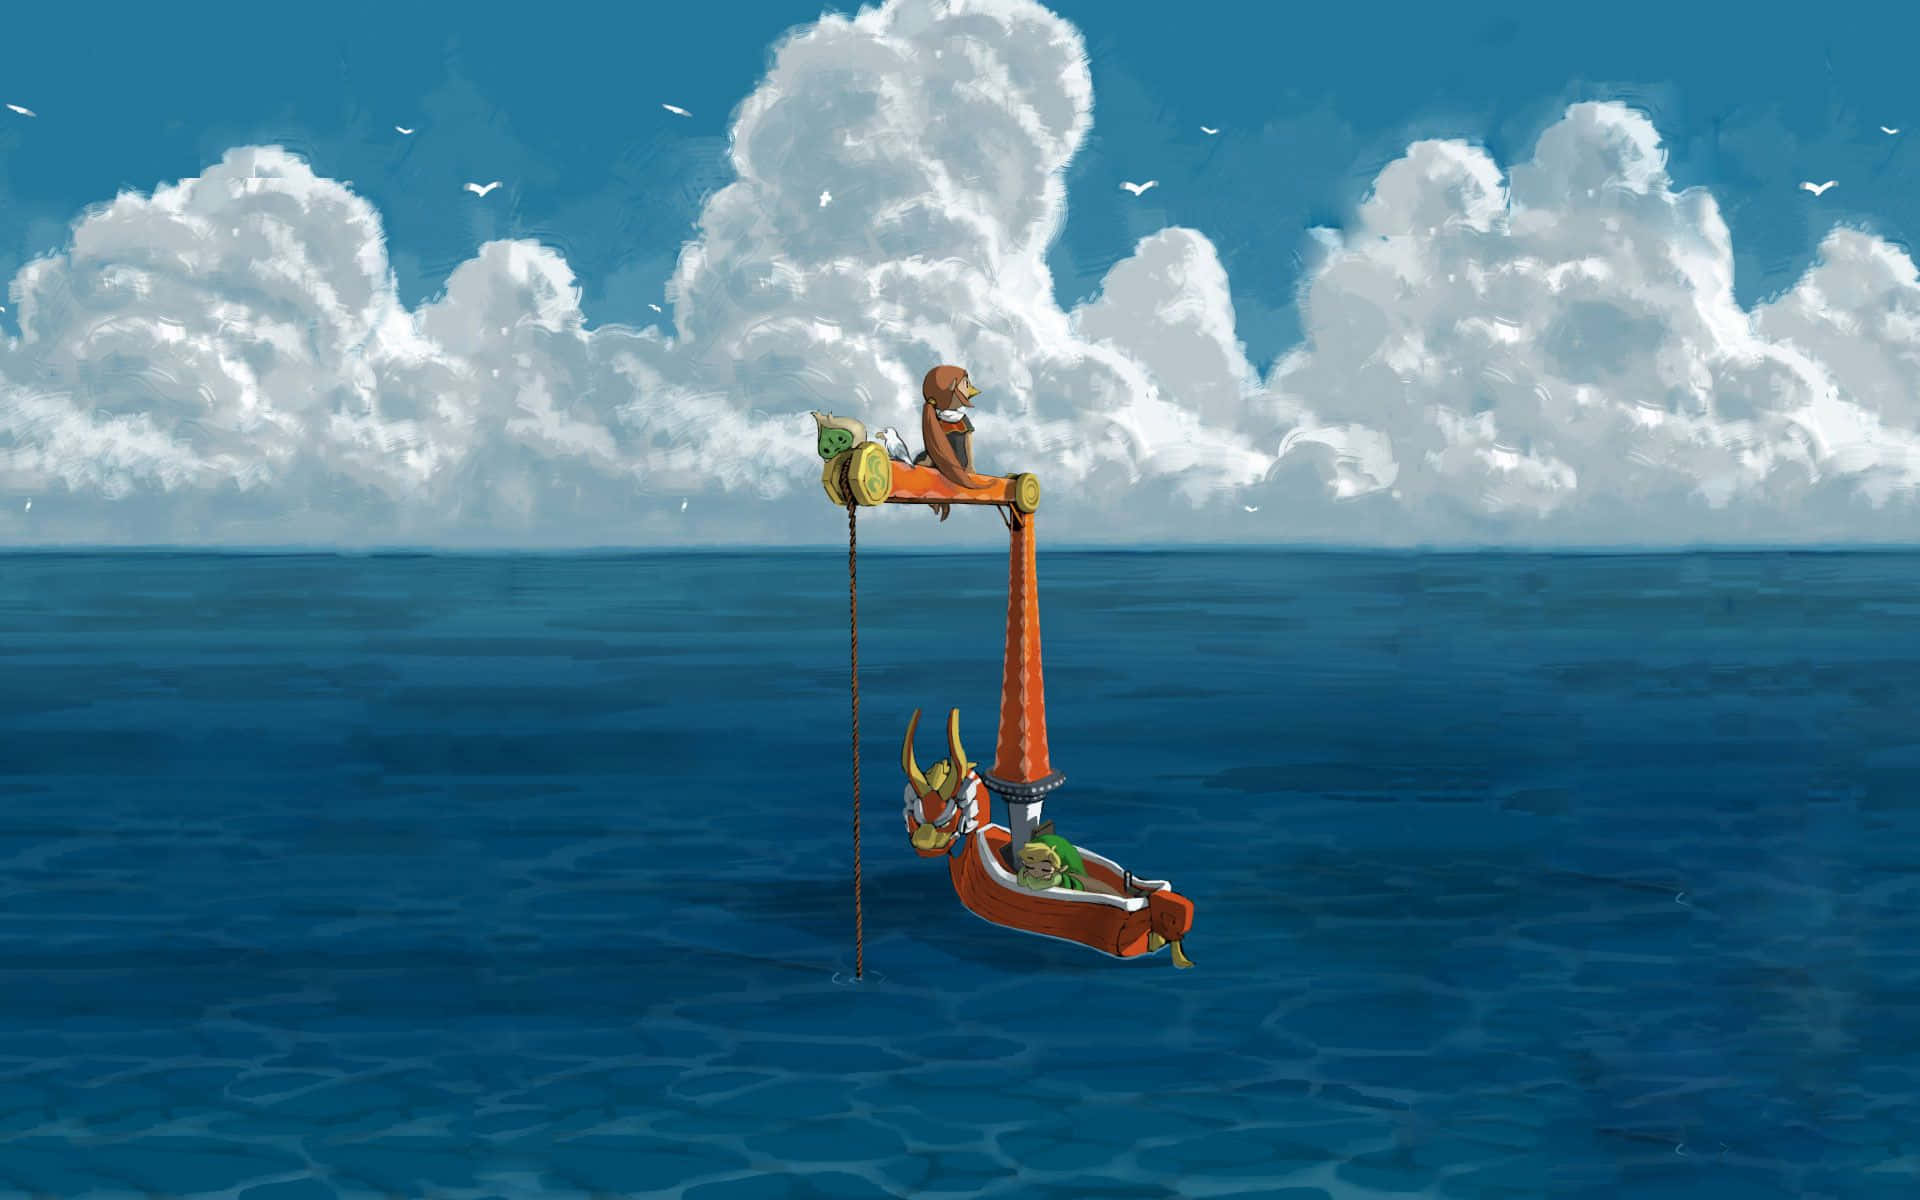 Link heroically sailing across the ocean in The Legend of Zelda: The Wind Waker. Wallpaper